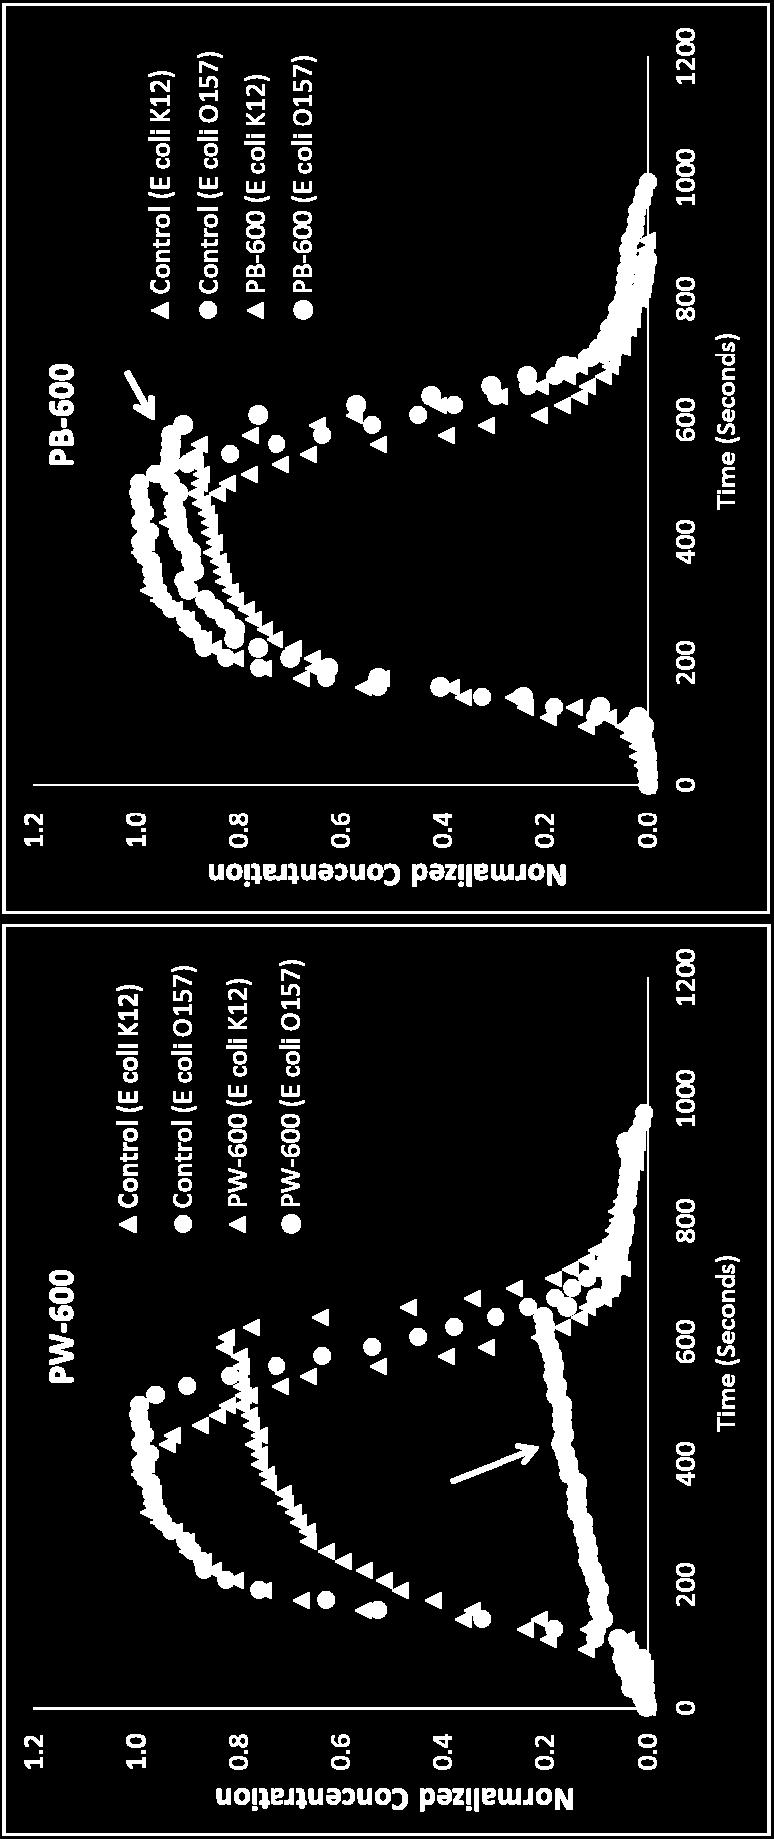 temperature on the transport of Pathogenic and Non-pathogenic Escherichia coli in